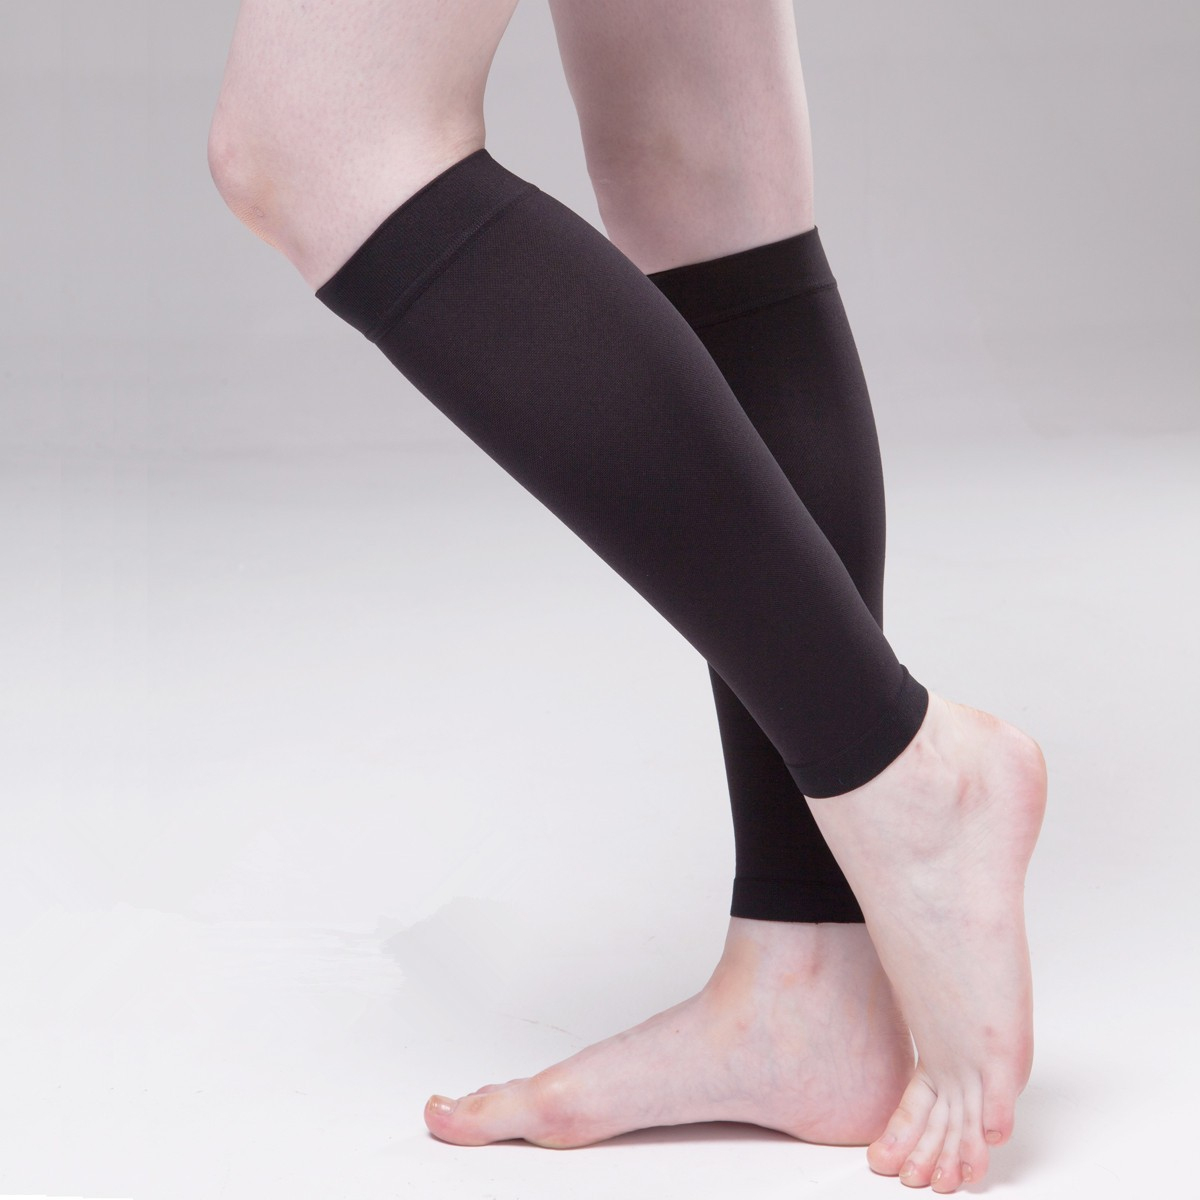 Mlxl 4 Seasons Compression Stocking Uni Socks For concernant Walmart Compression Stockings